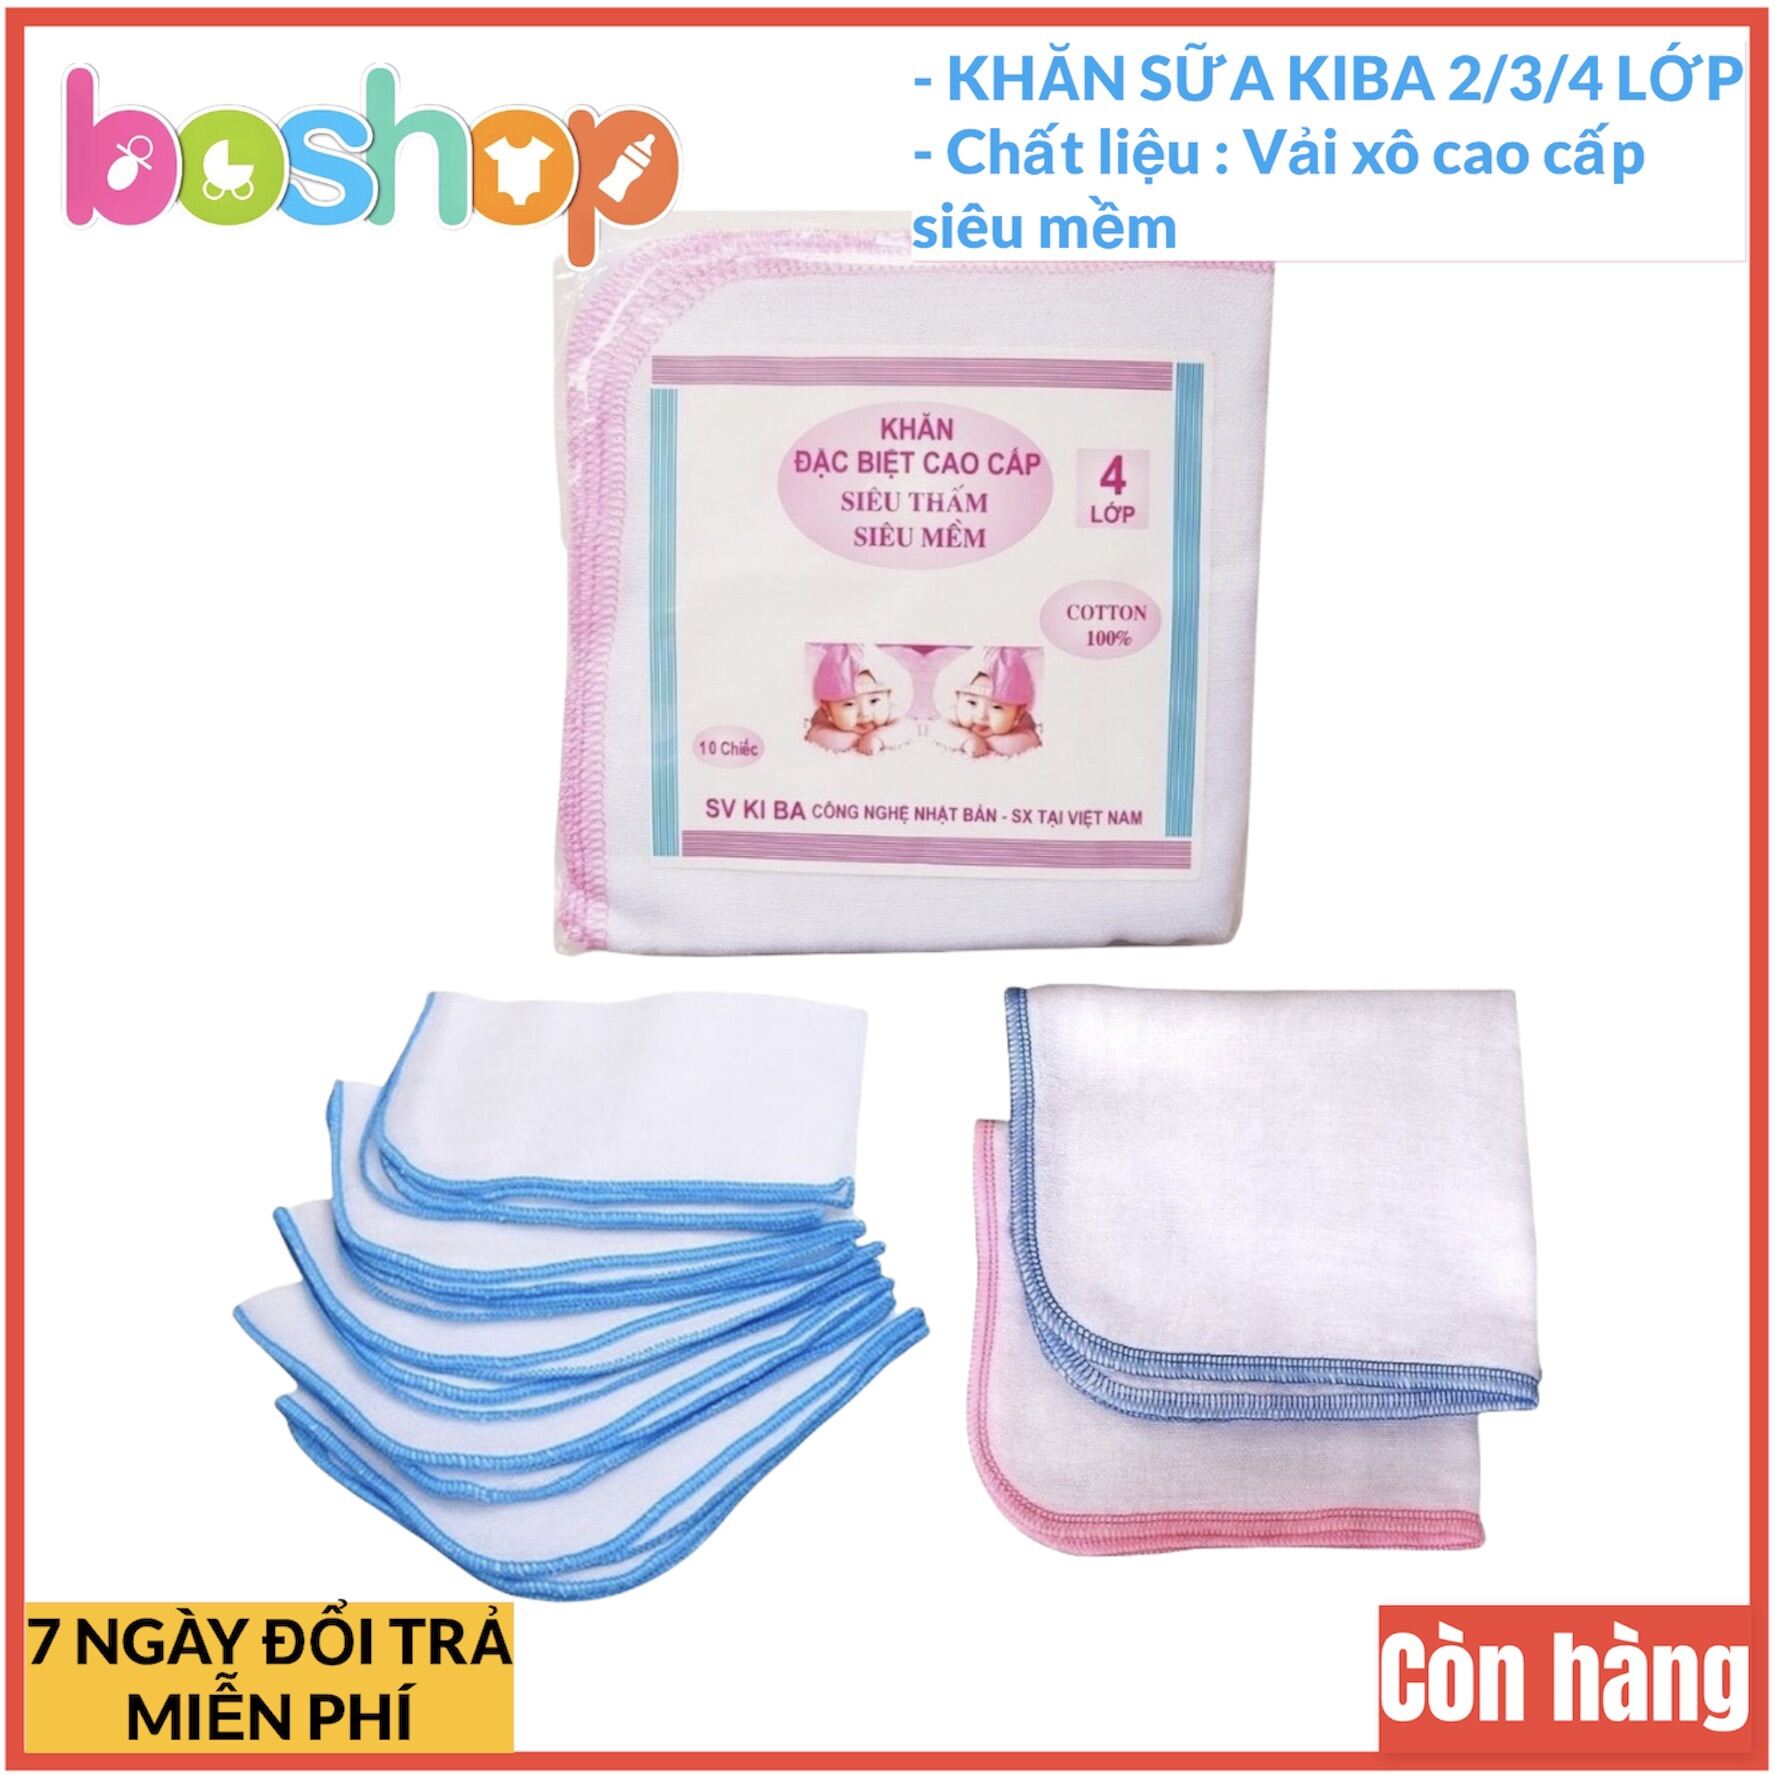 Set 10 khăn sữa Kiba cao cấp made in Viet Nam phân loại 2 3 4 lớp dùng cho